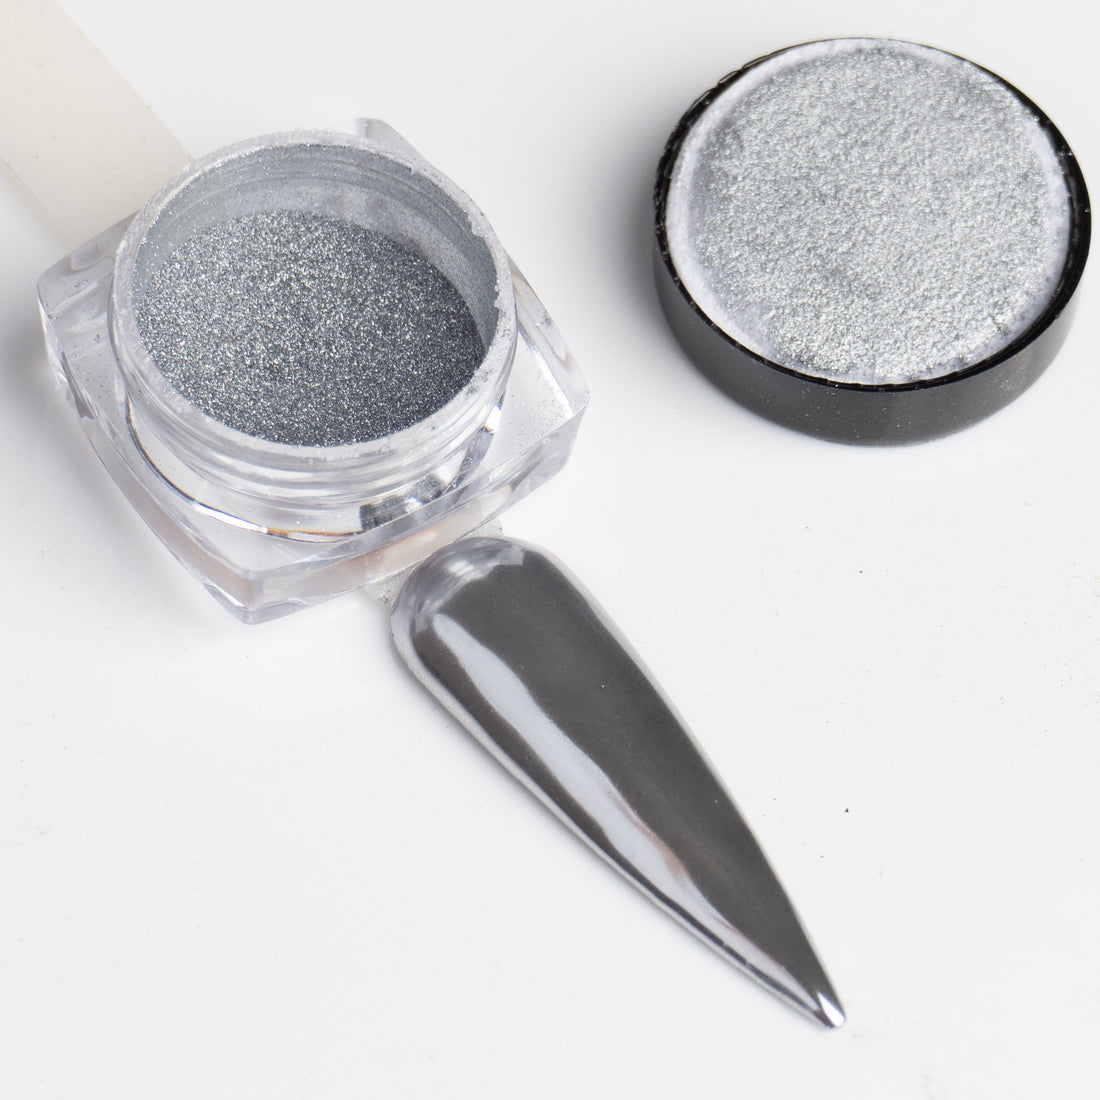 Chrome Silver Powder For nails